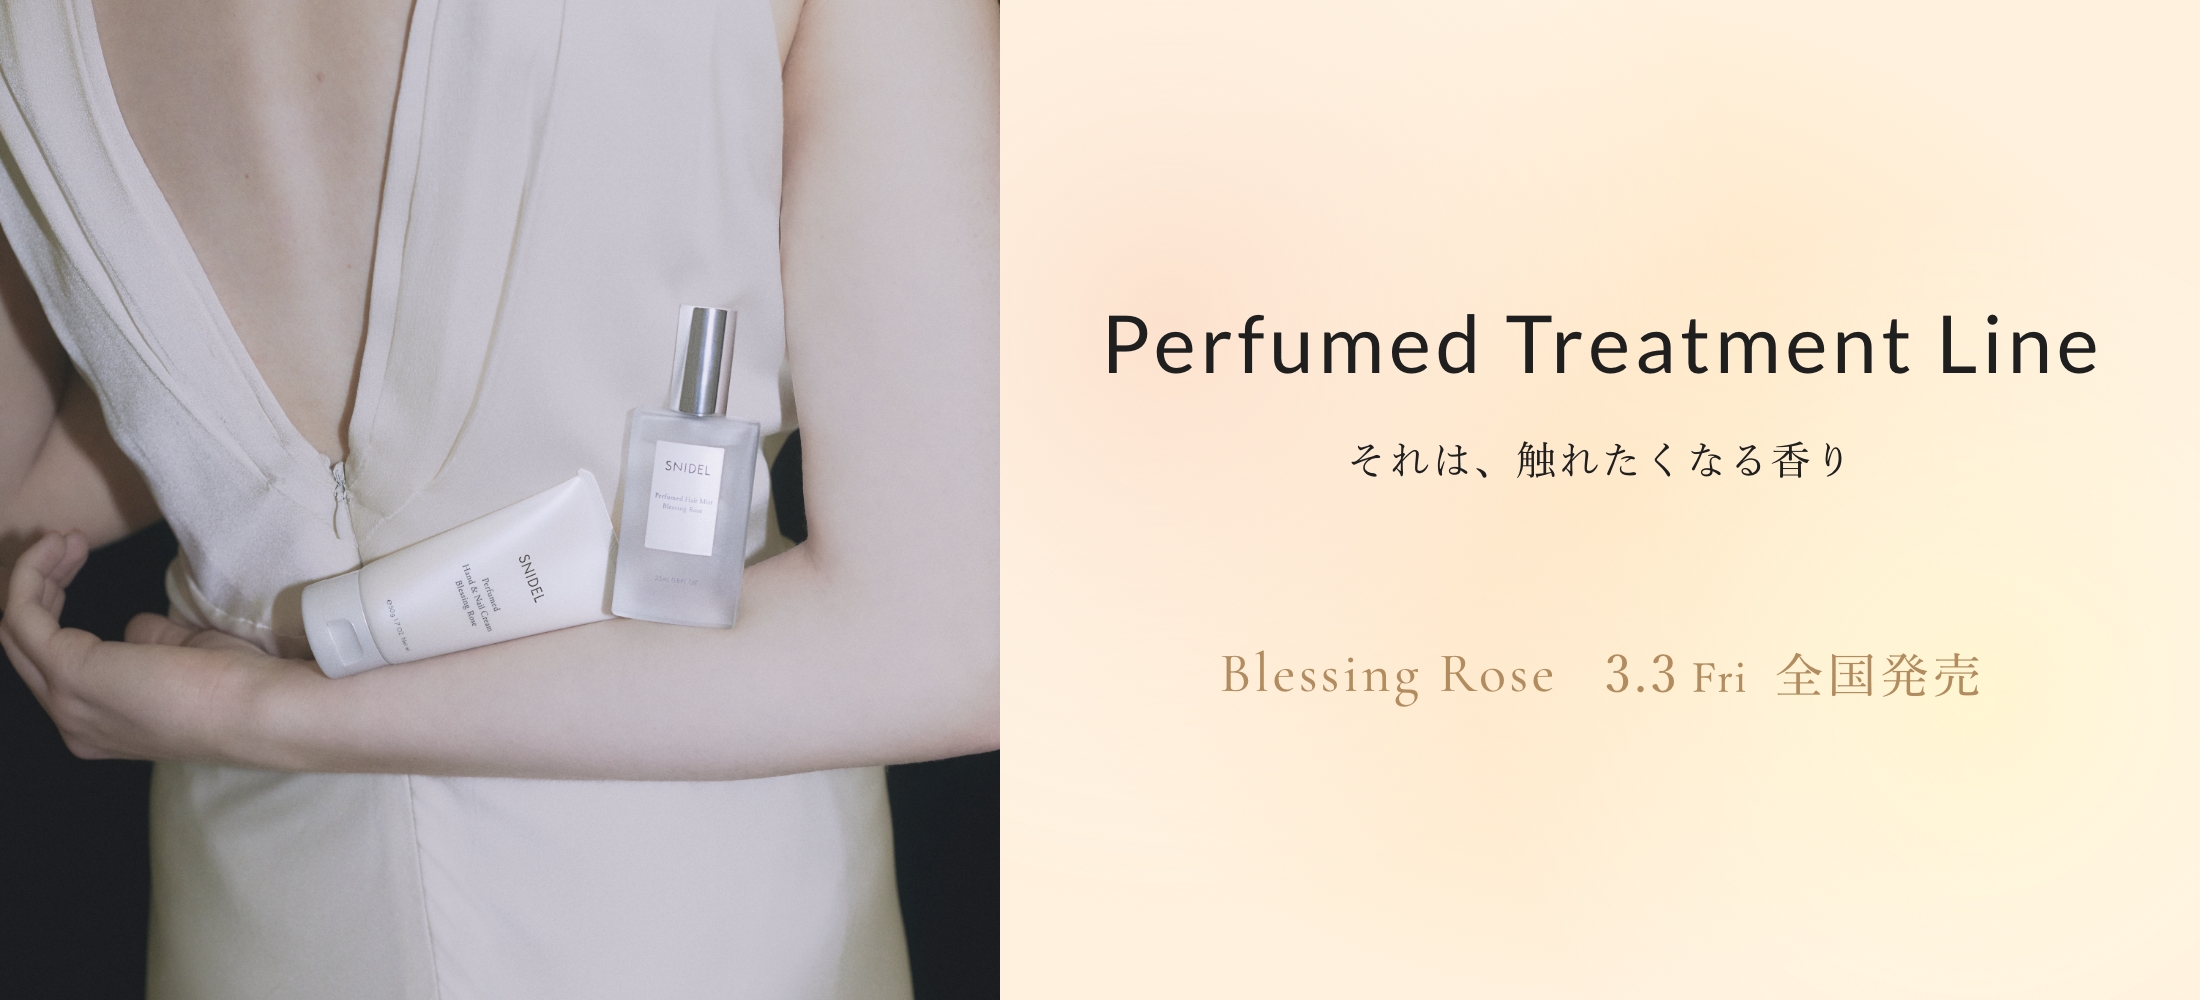 Perfumed Treatment Line